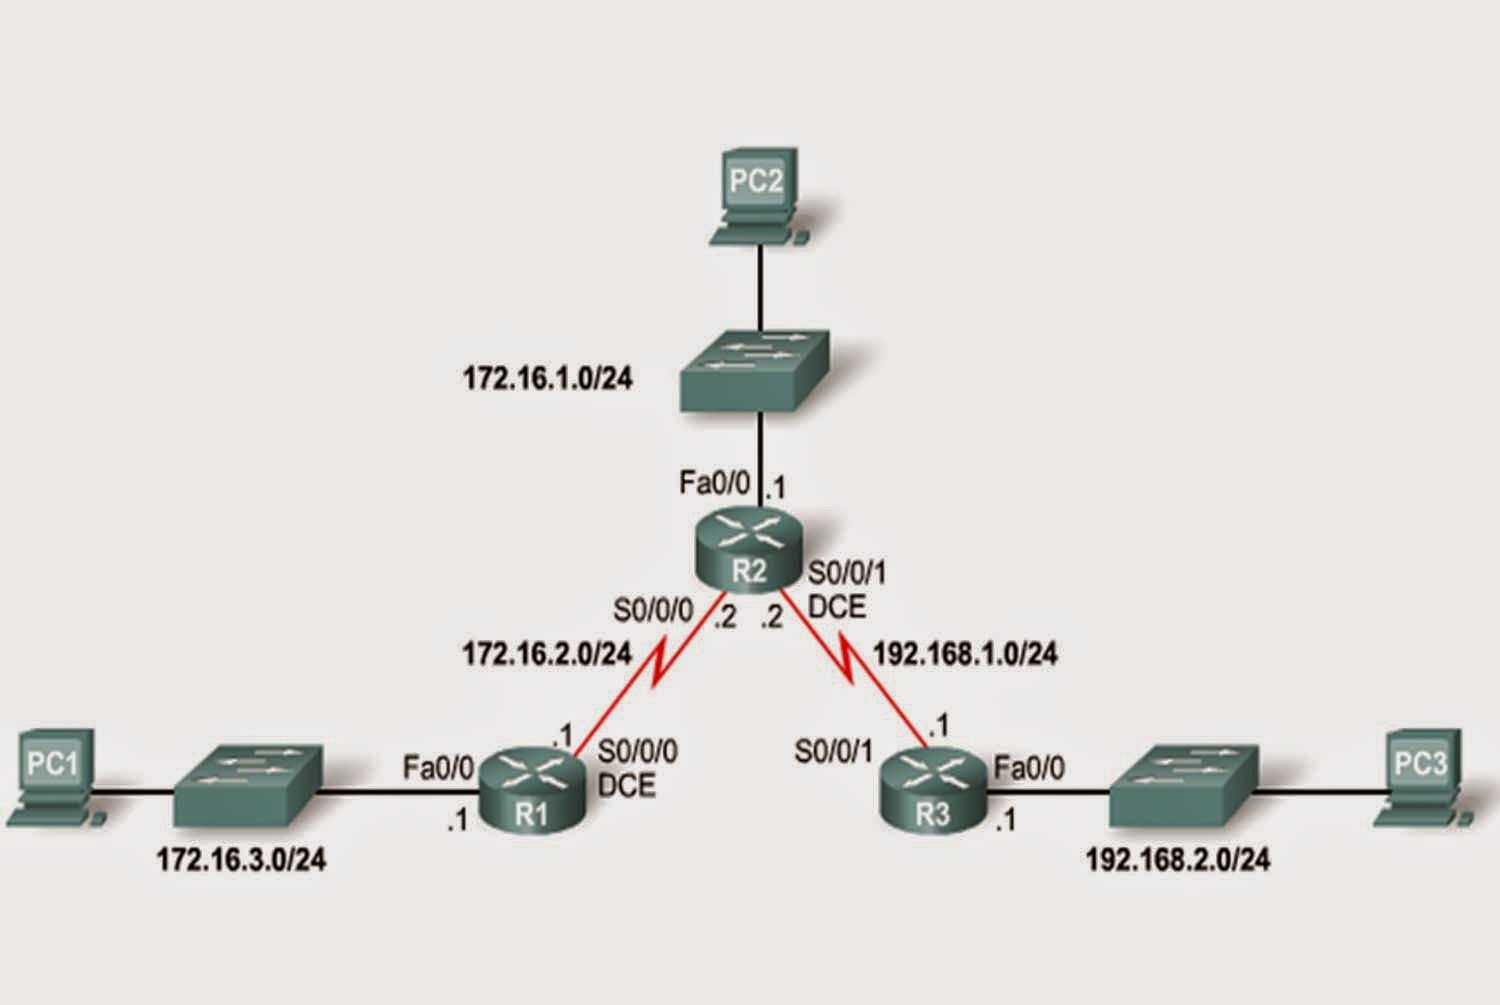 Почему 0 сеть. Таблица маршрутизации Router. Статическая маршрутизация Cisco. Статическая и динамическая маршрутизация. Динамическая маршрутизация схема Циско.